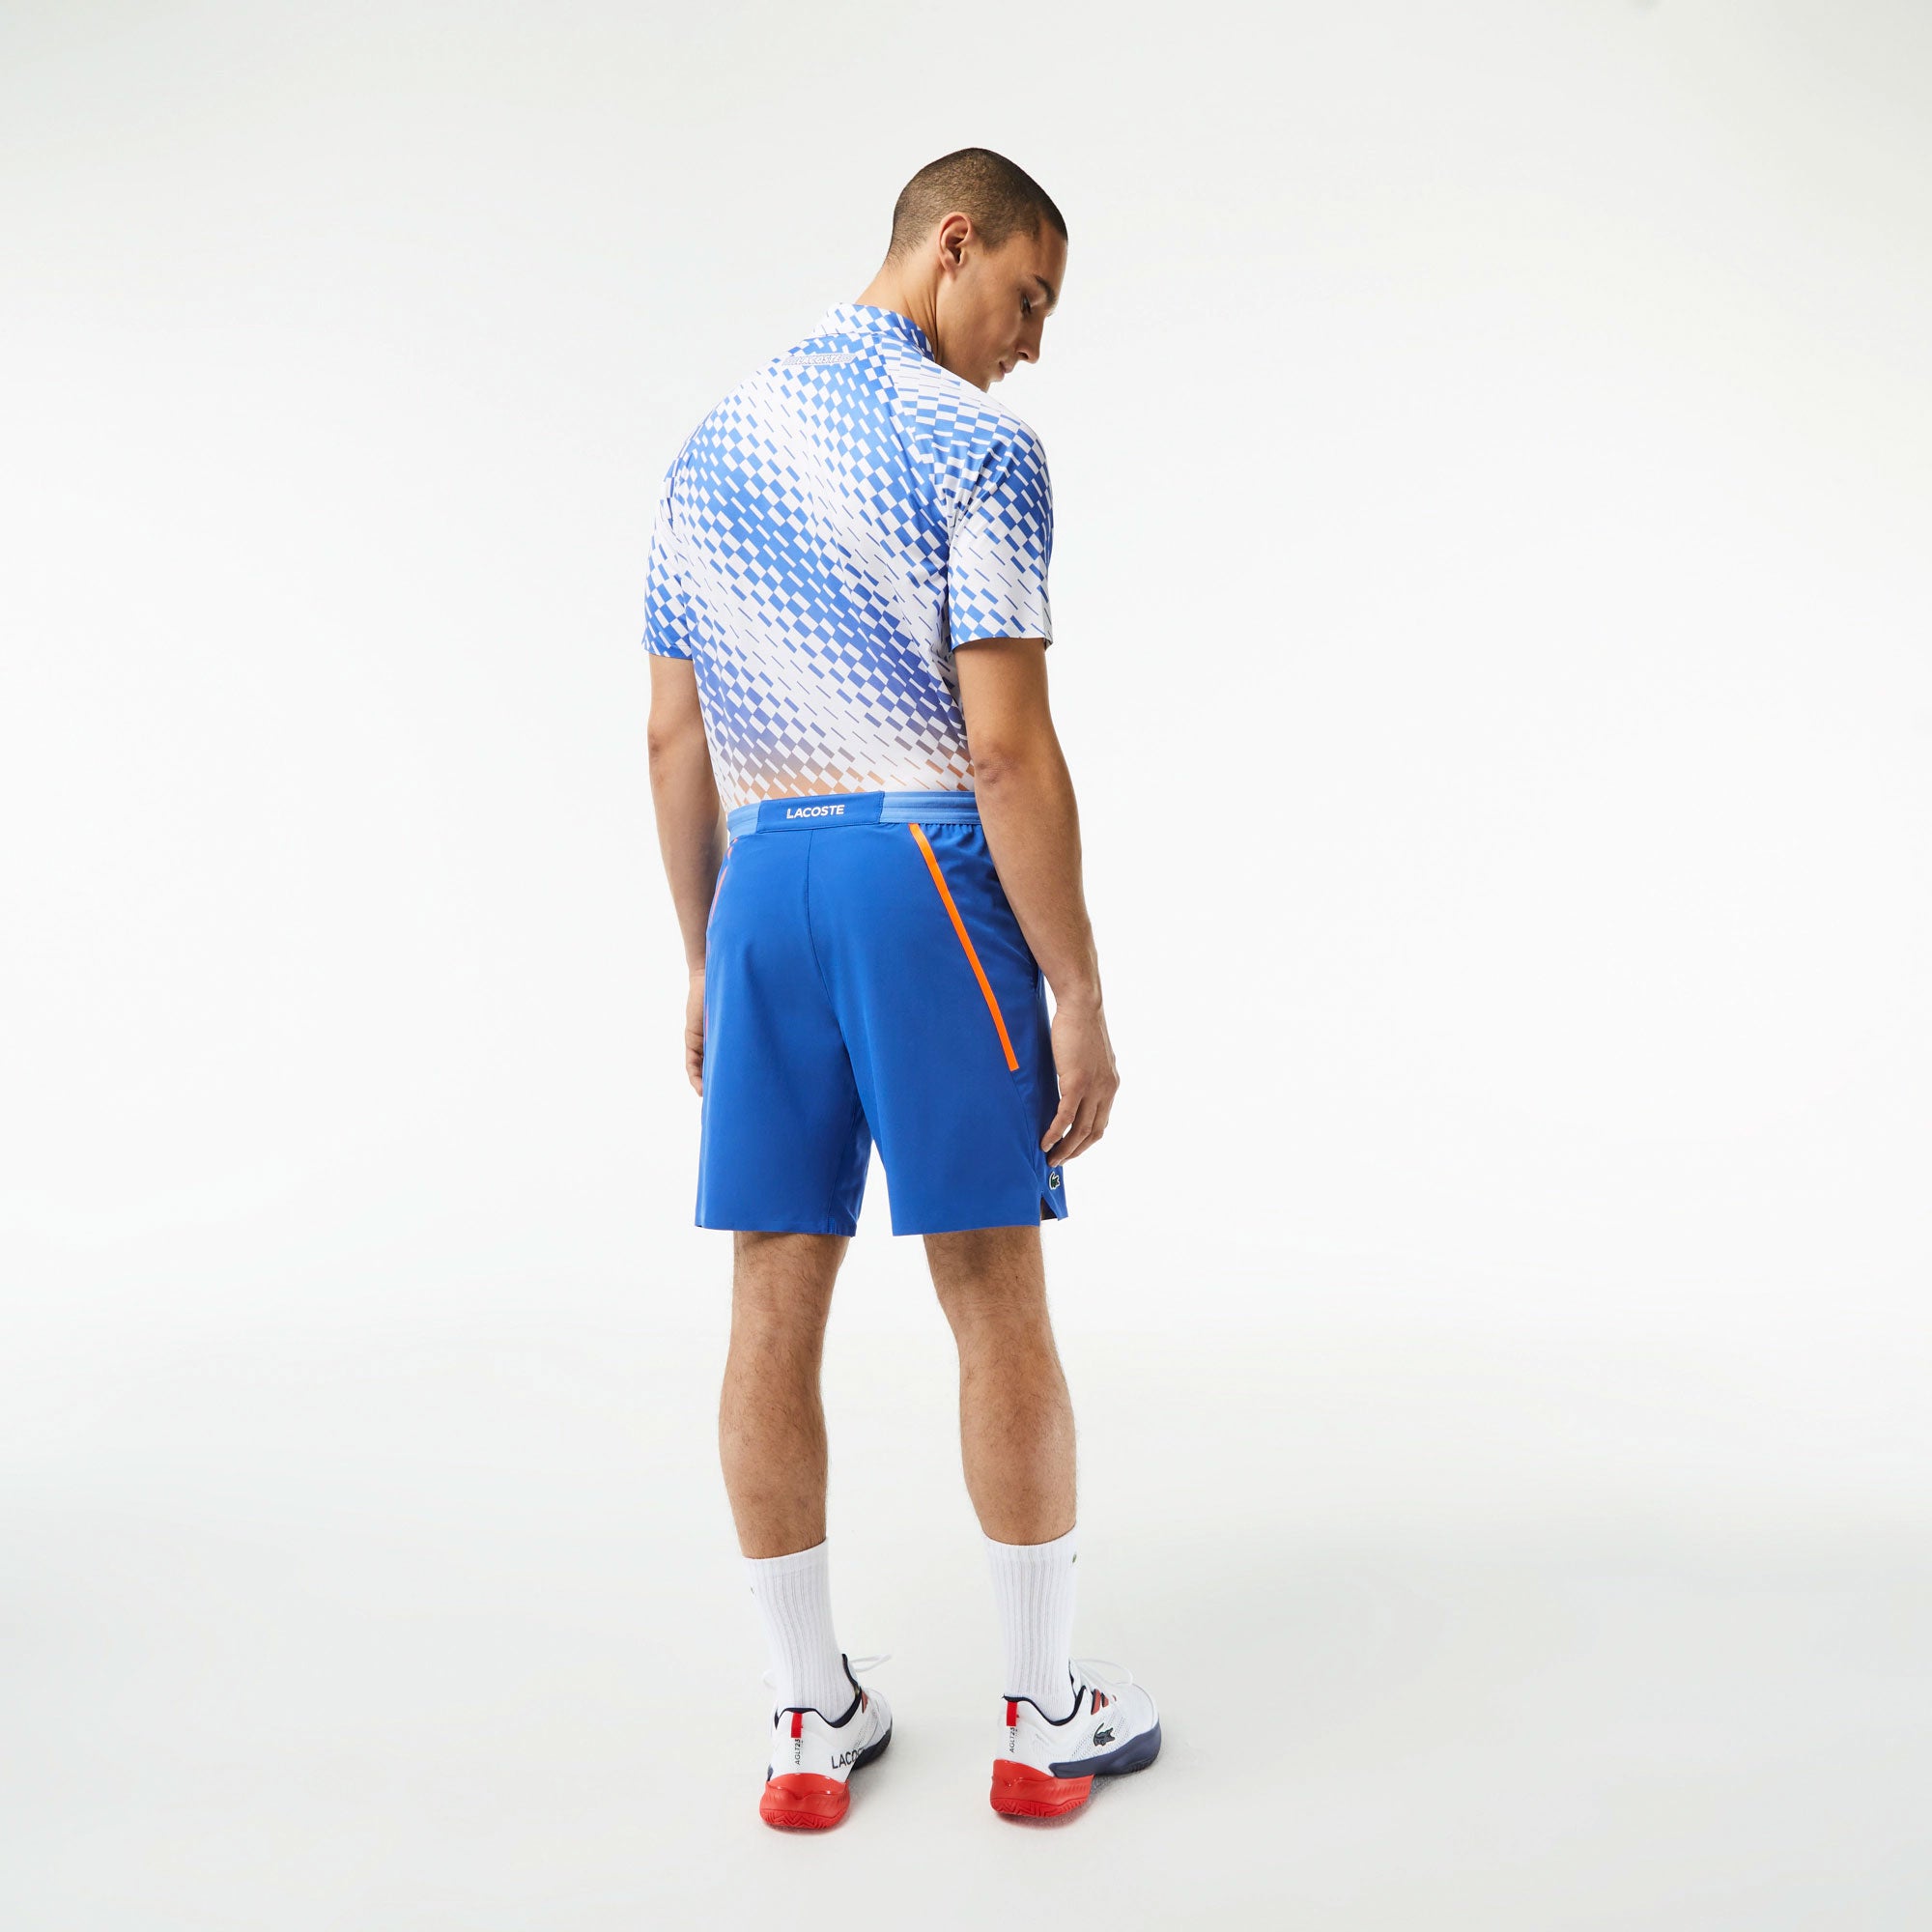 Lacoste x Novak Djokovic Men's Stretch Tennis Shorts Blue (2)